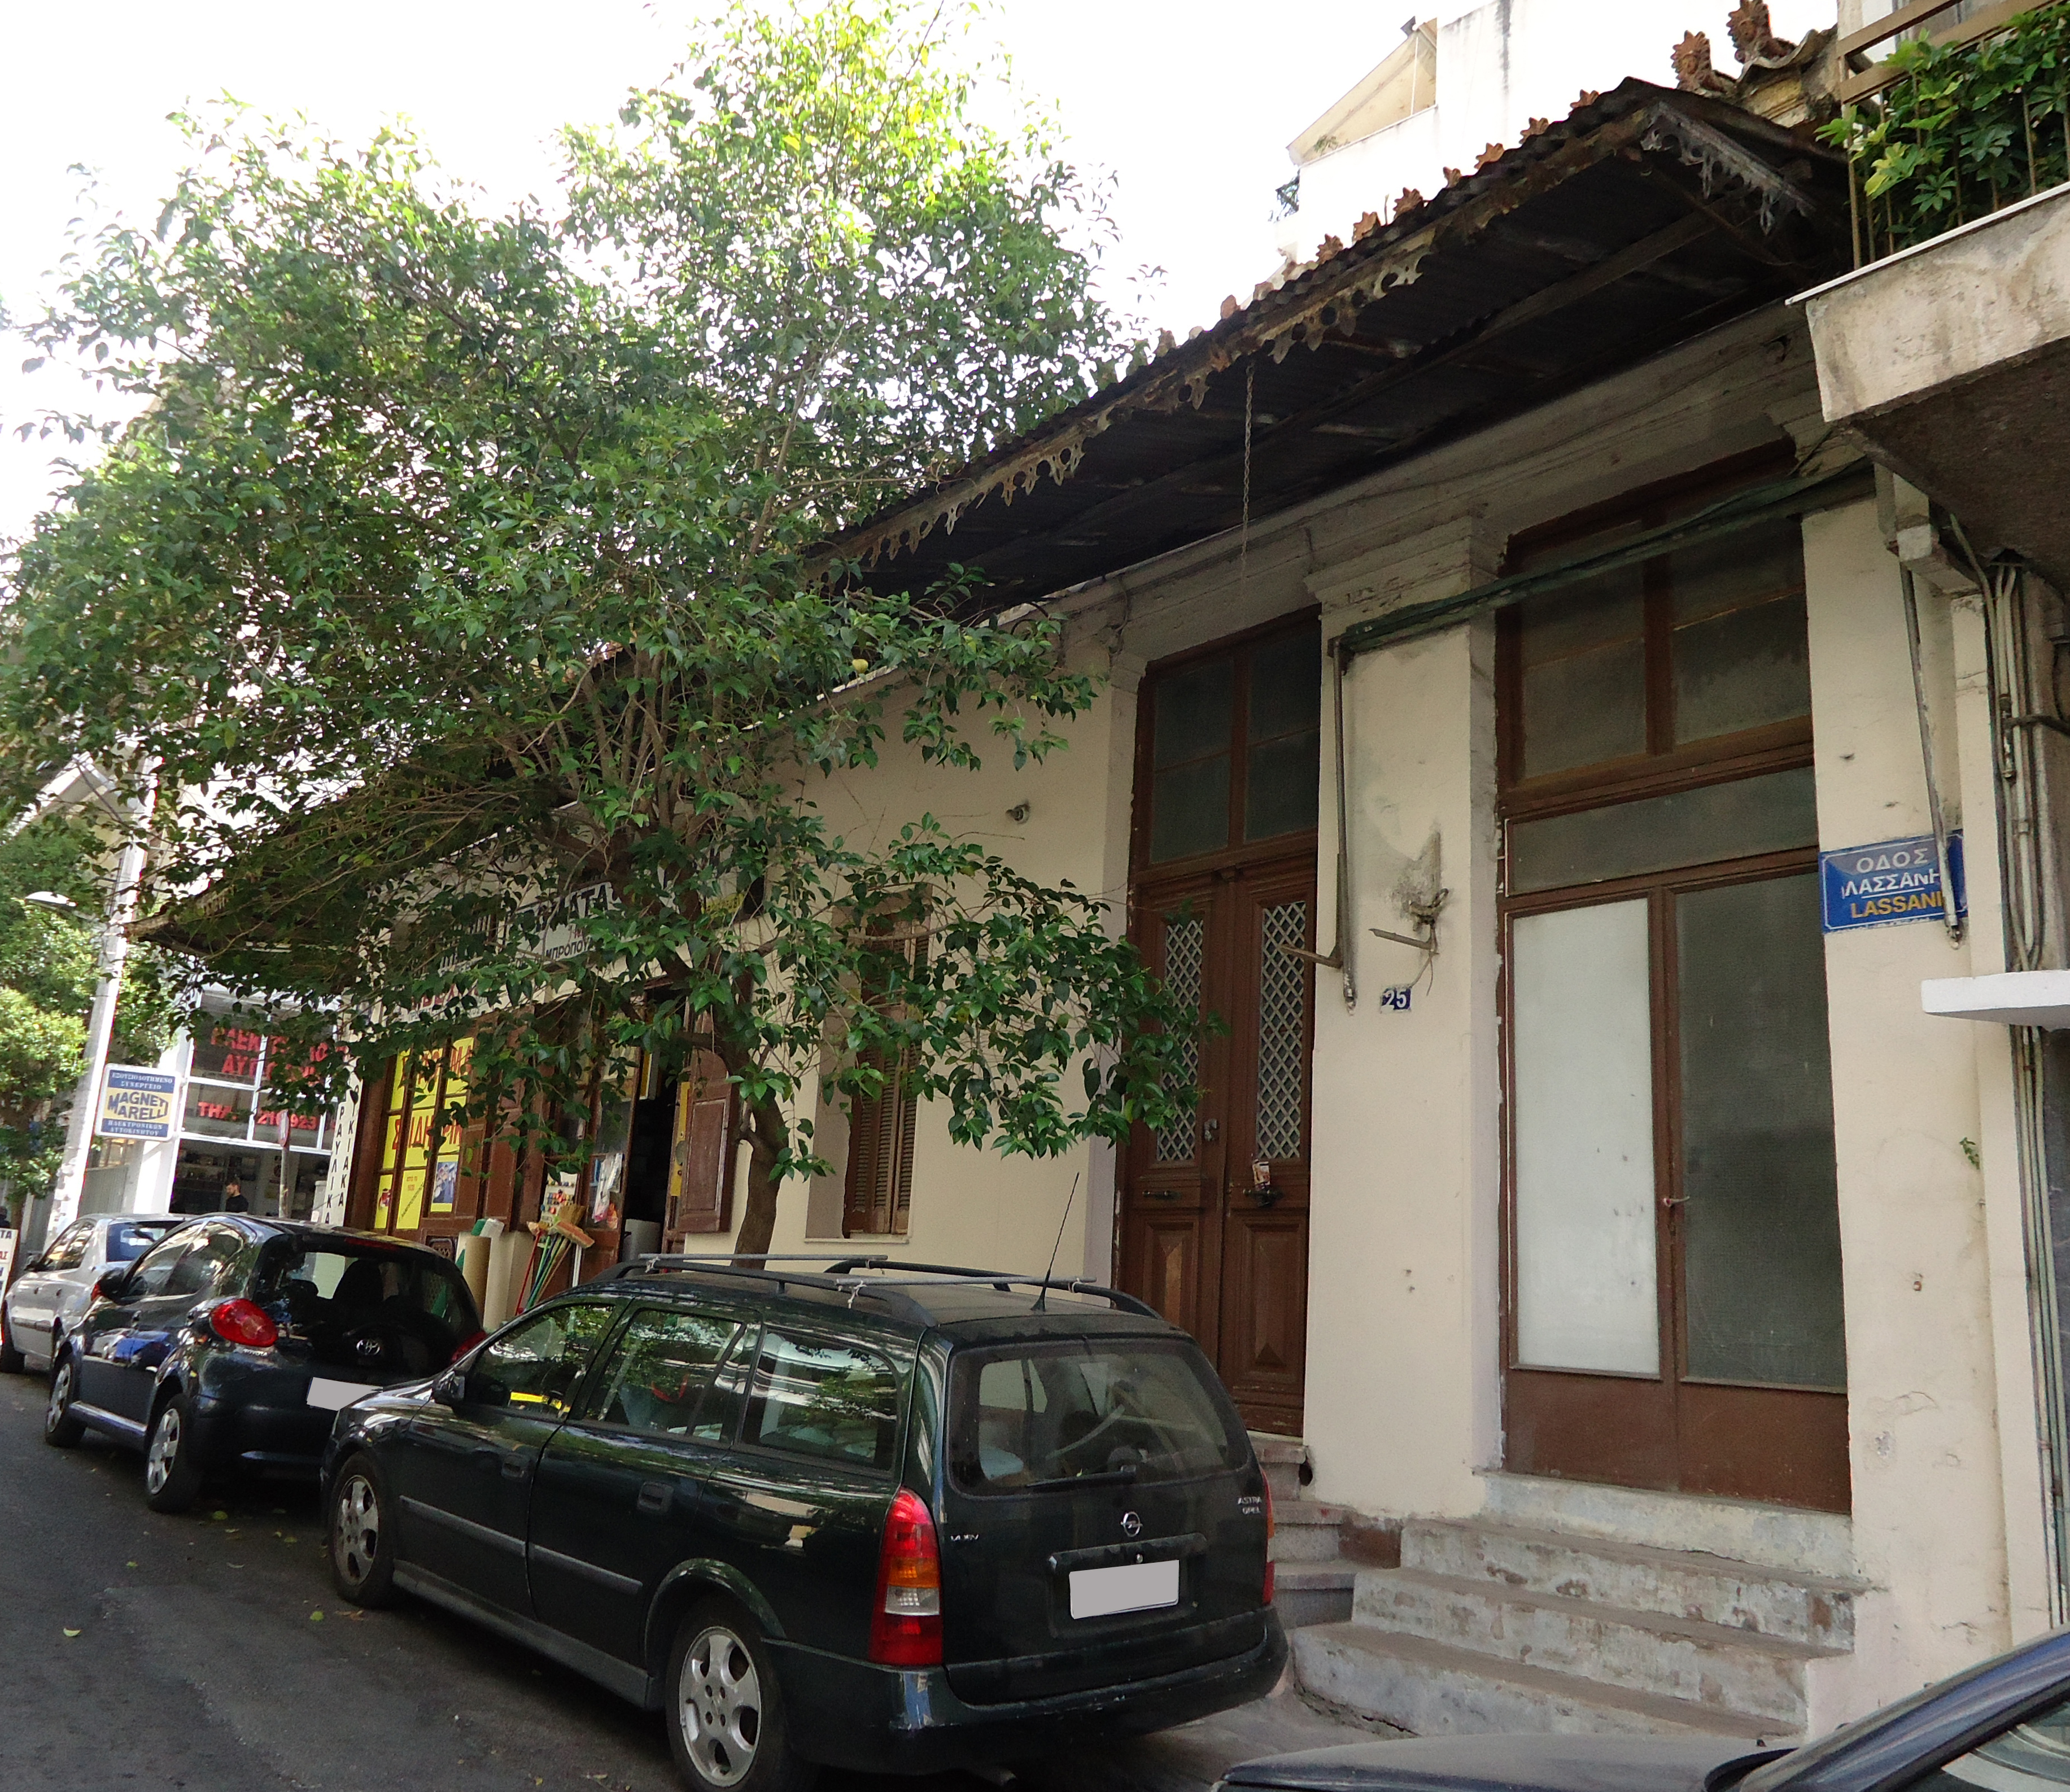 View of the façade on Lassani street